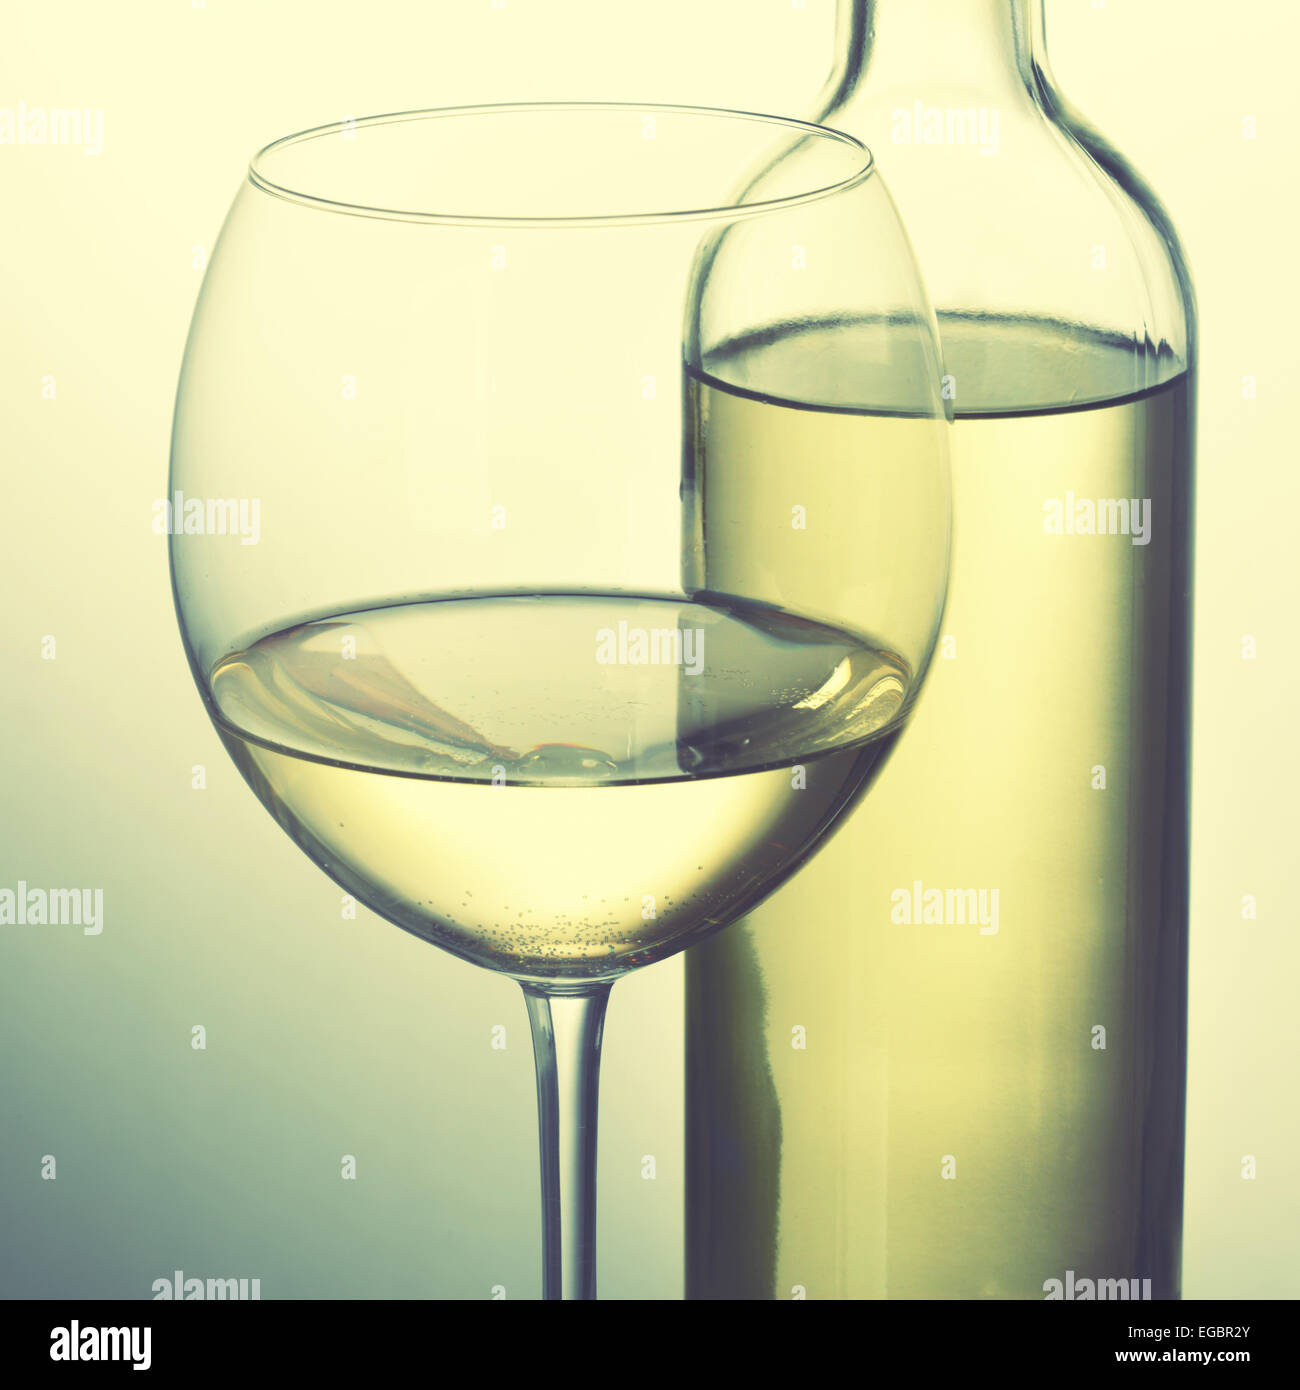 Bottle of white wine and glass. Retro style image Stock Photo